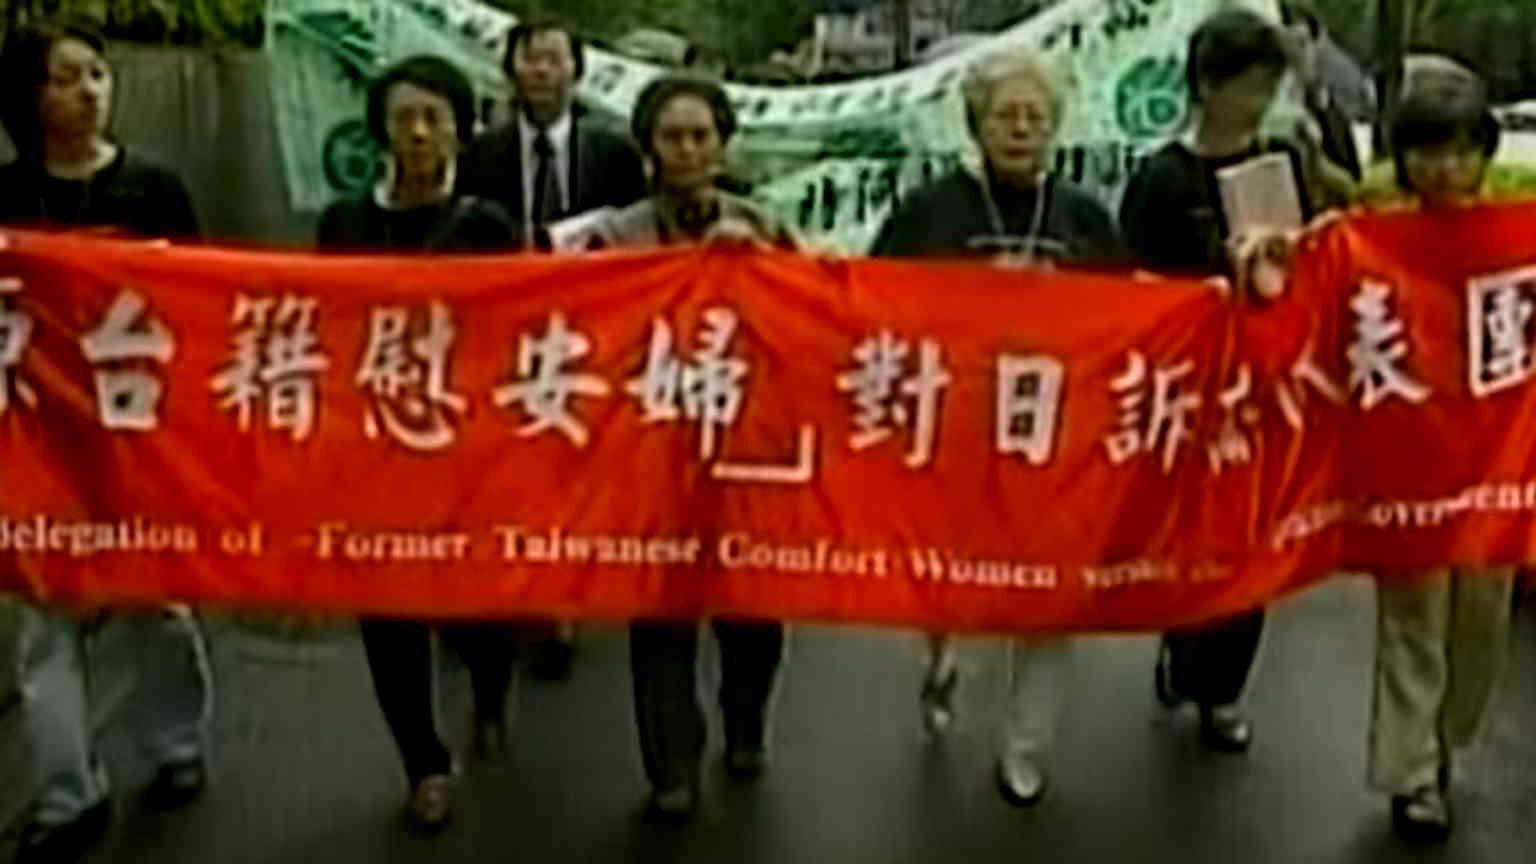 Taiwan’s last ‘comfort woman’ survivor dies at 92